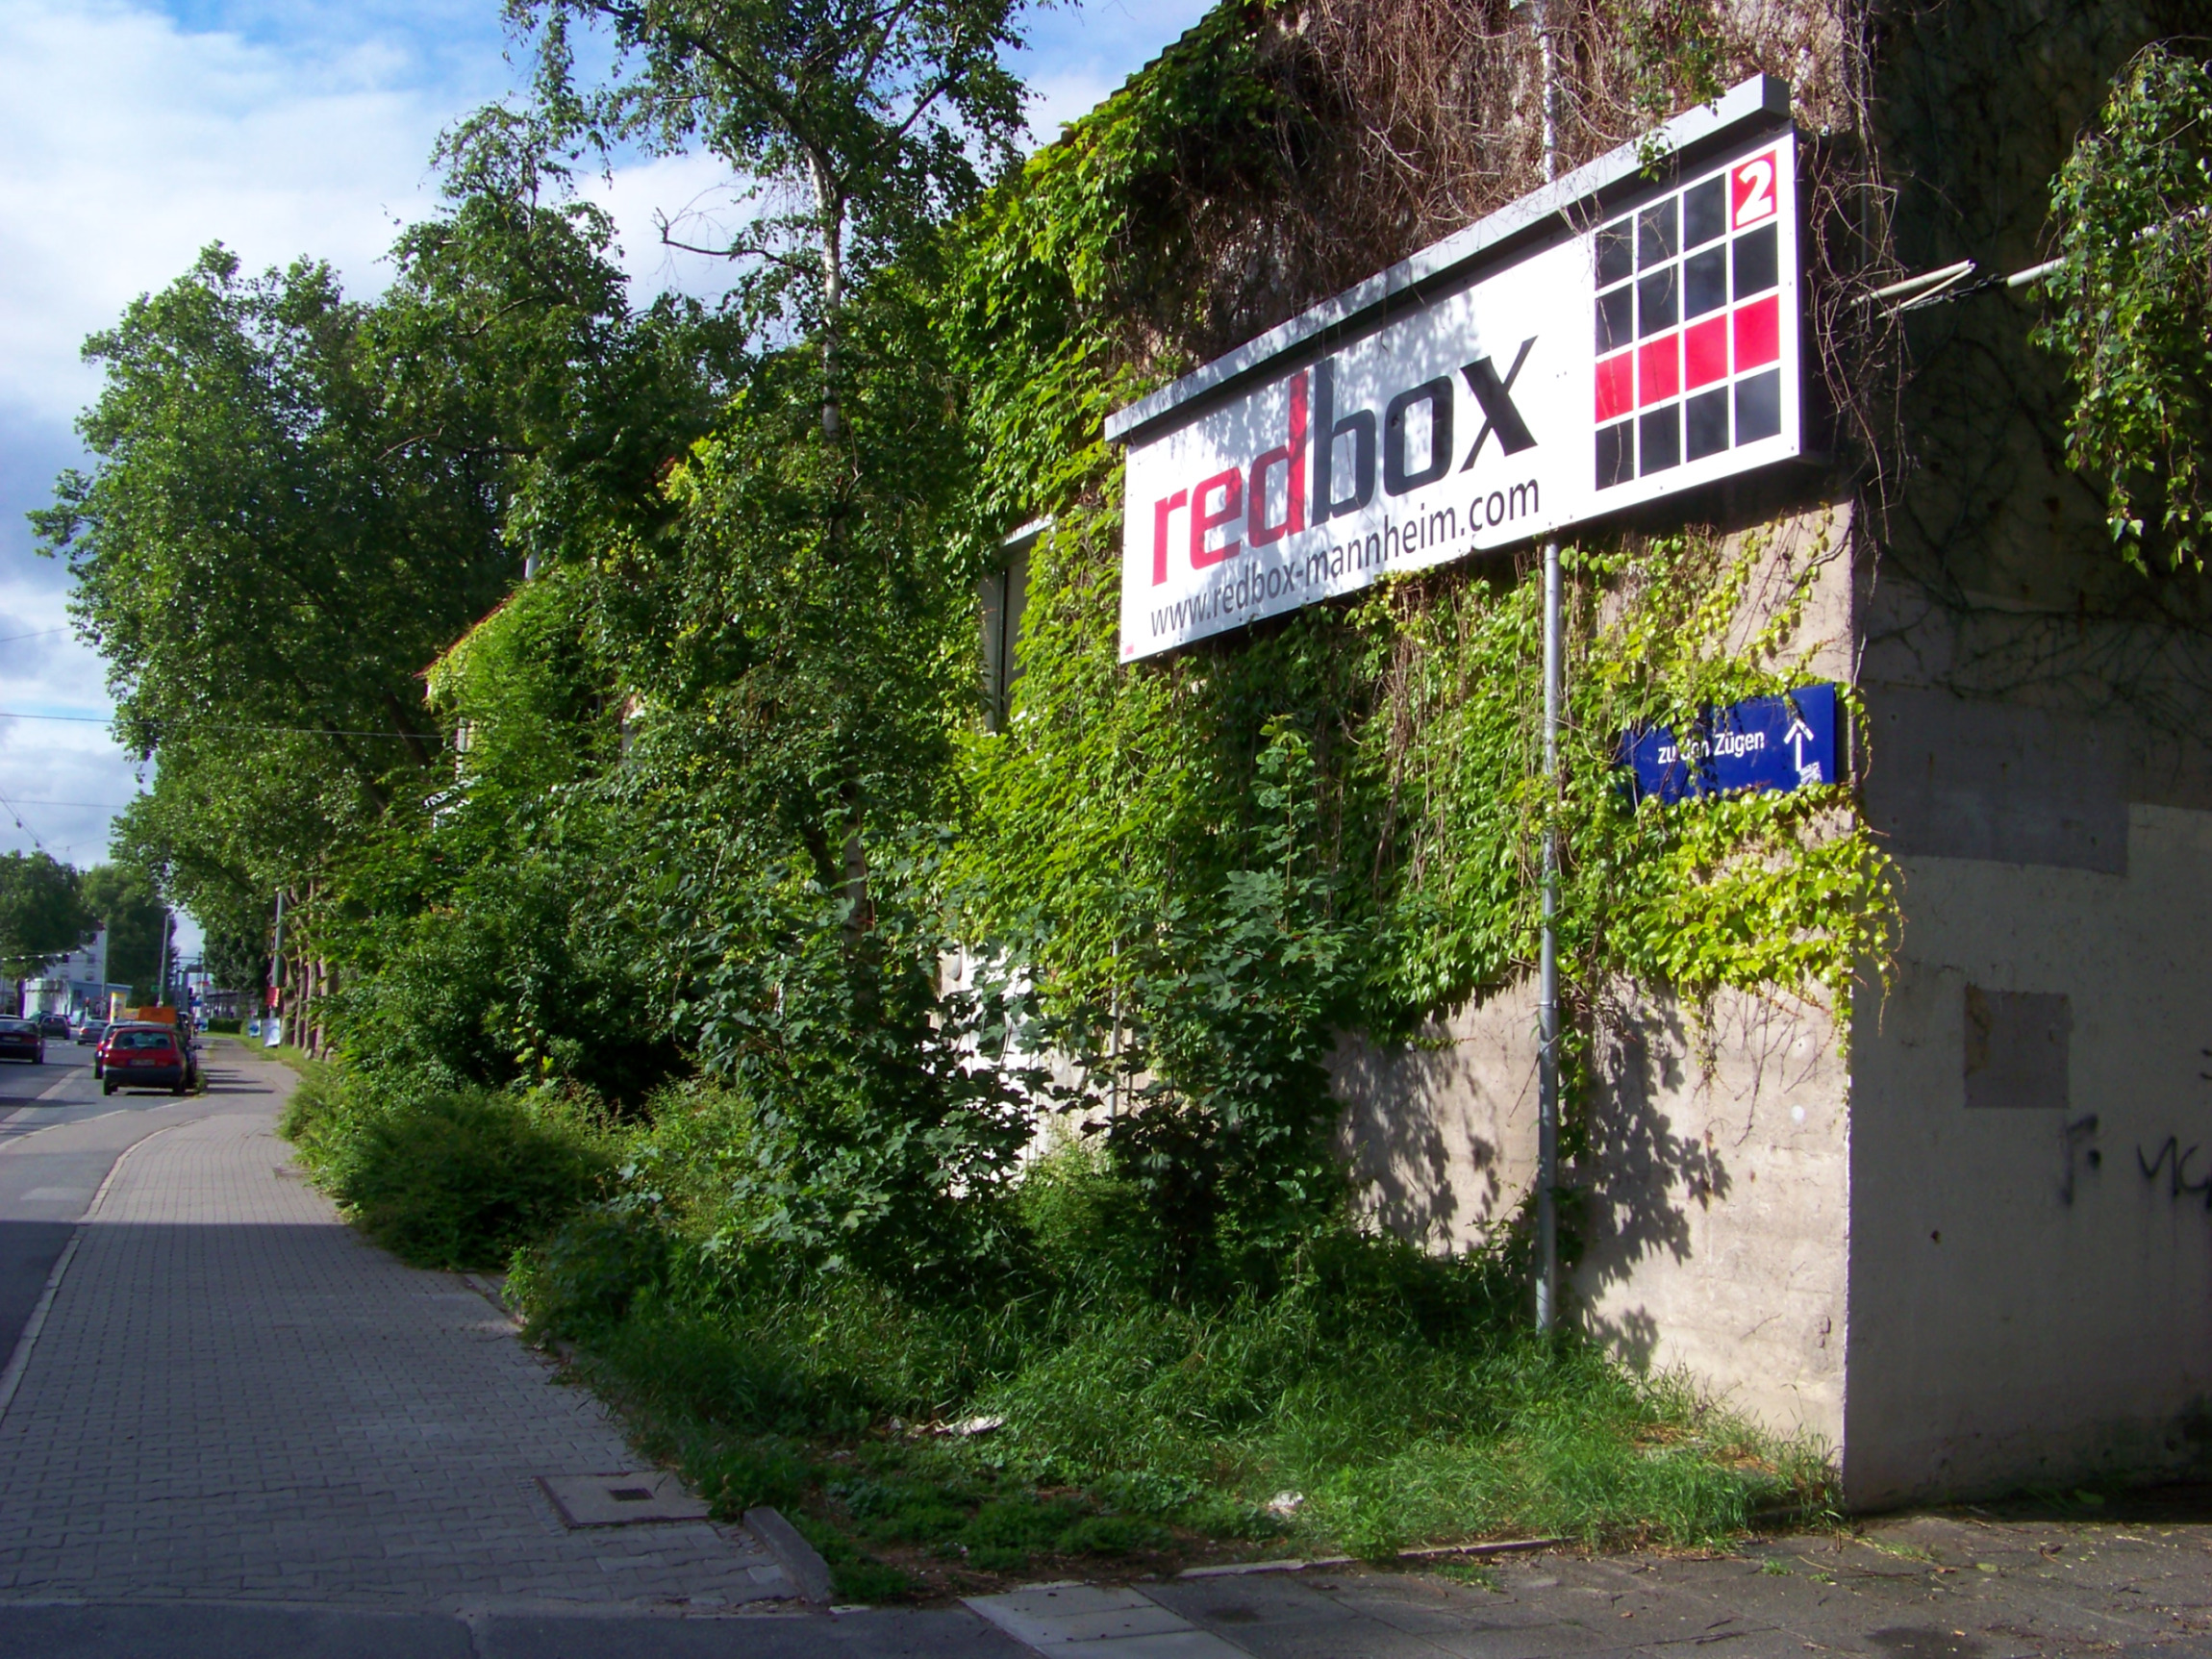 Datei:Redbox-mannheim.jpg